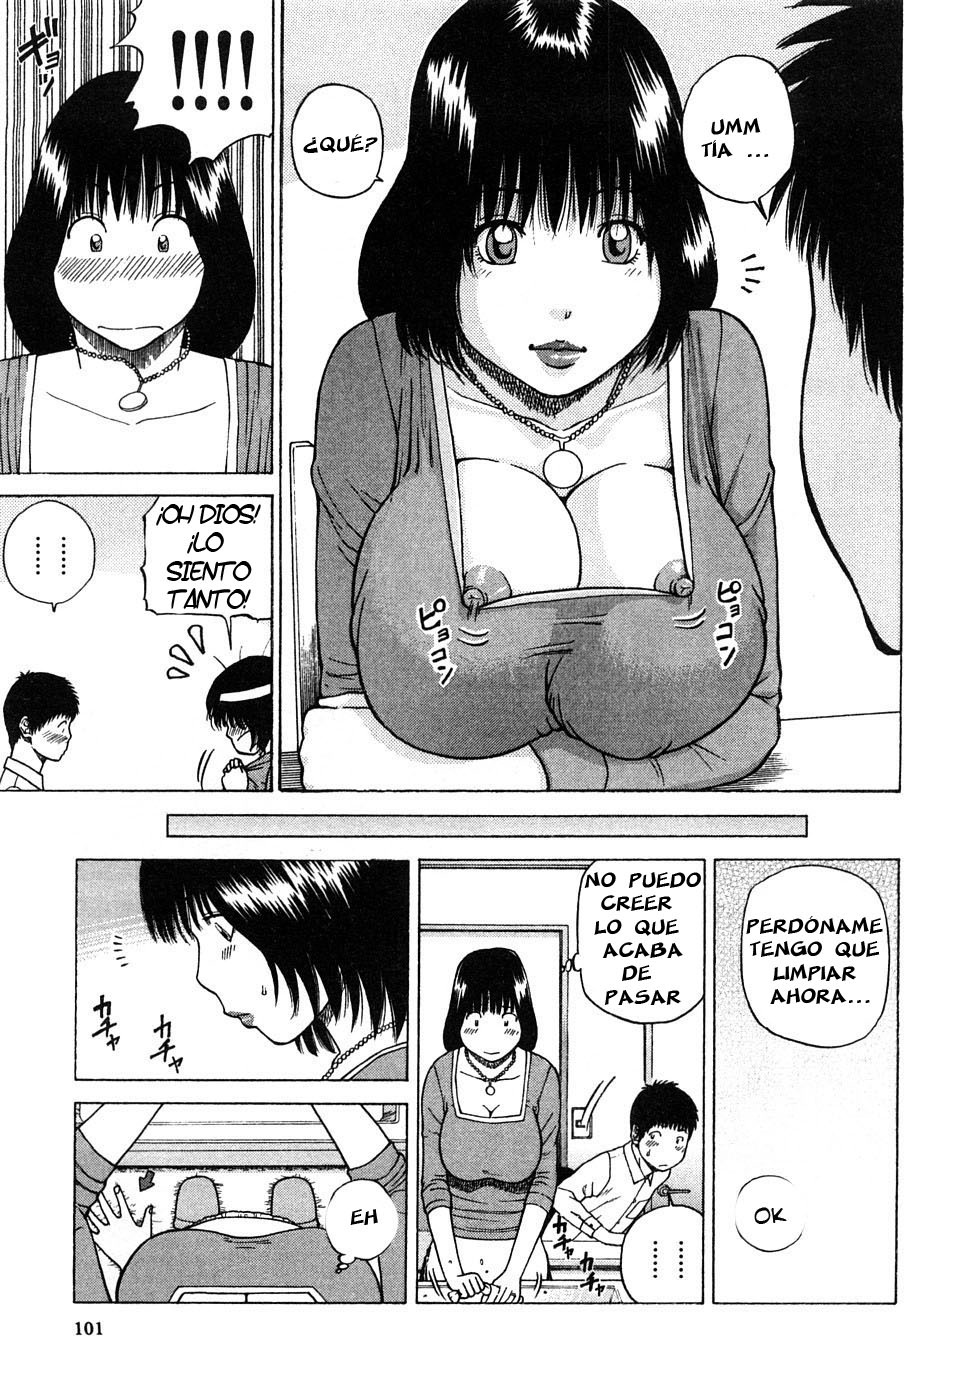 Visitando a mi Tía Caliente - 7 - Comics Porno - Hentai Manga - Cartoon XXX